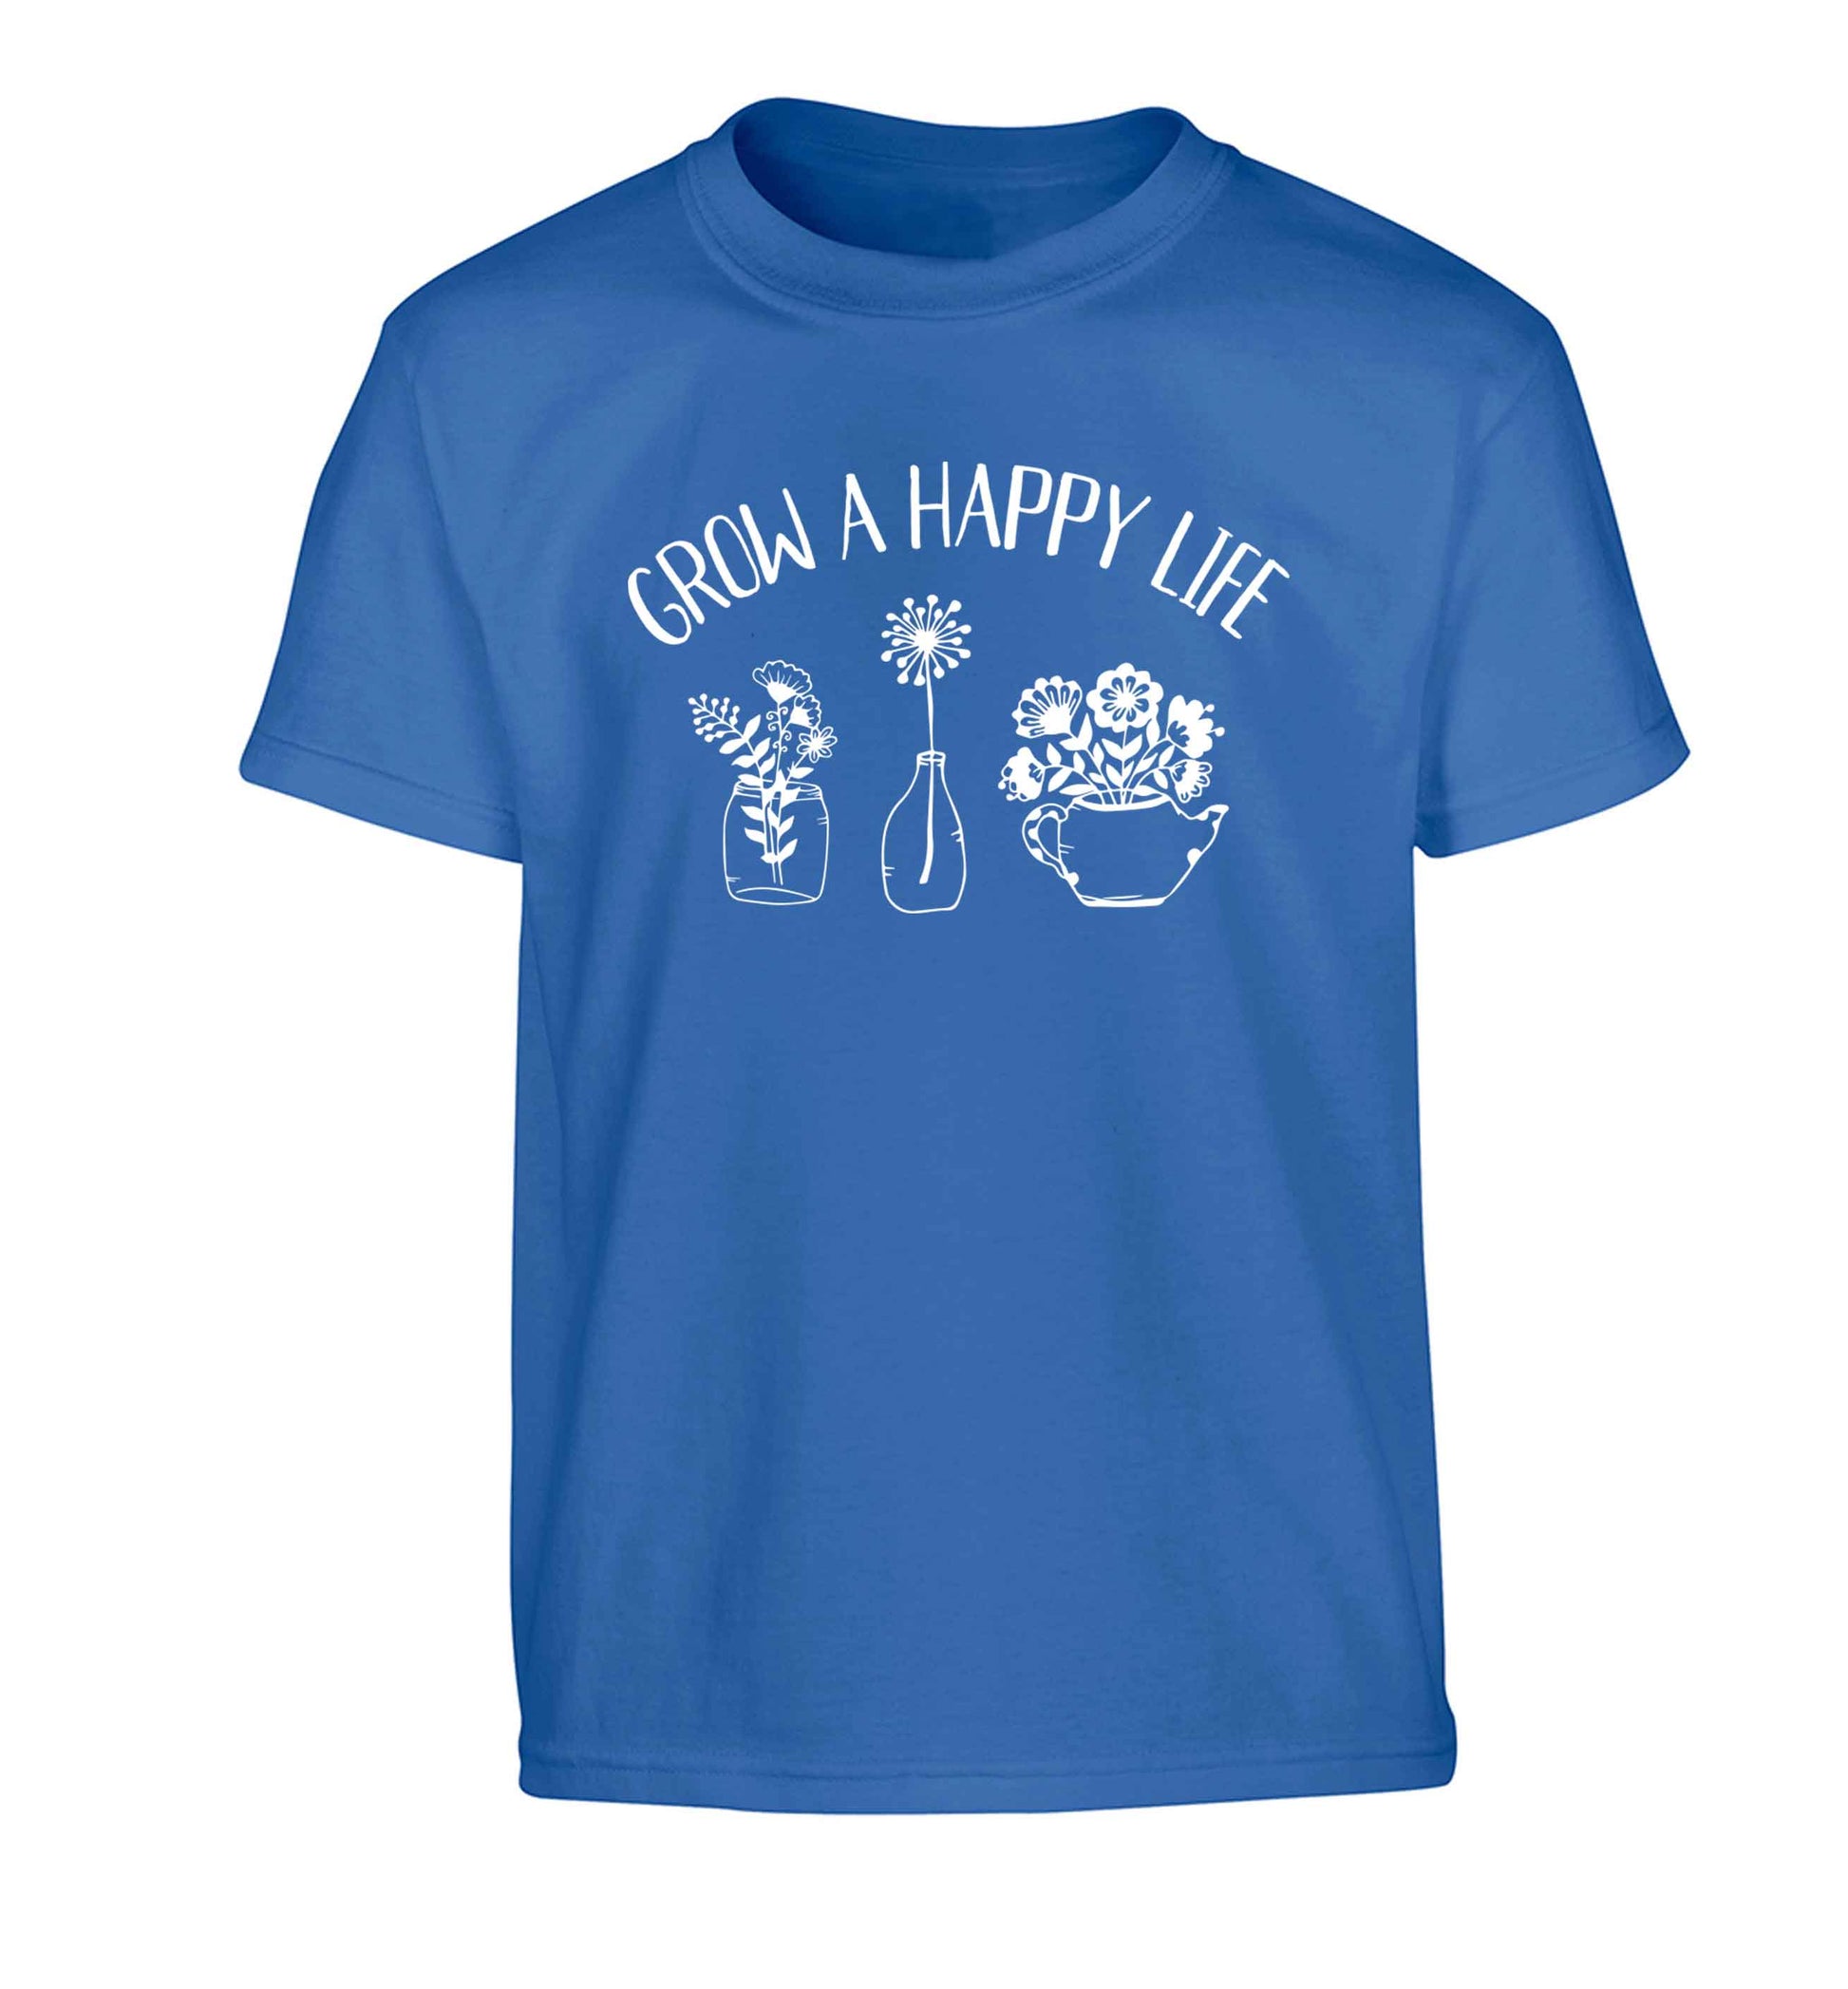 Grow a happy life Children's blue Tshirt 12-13 Years